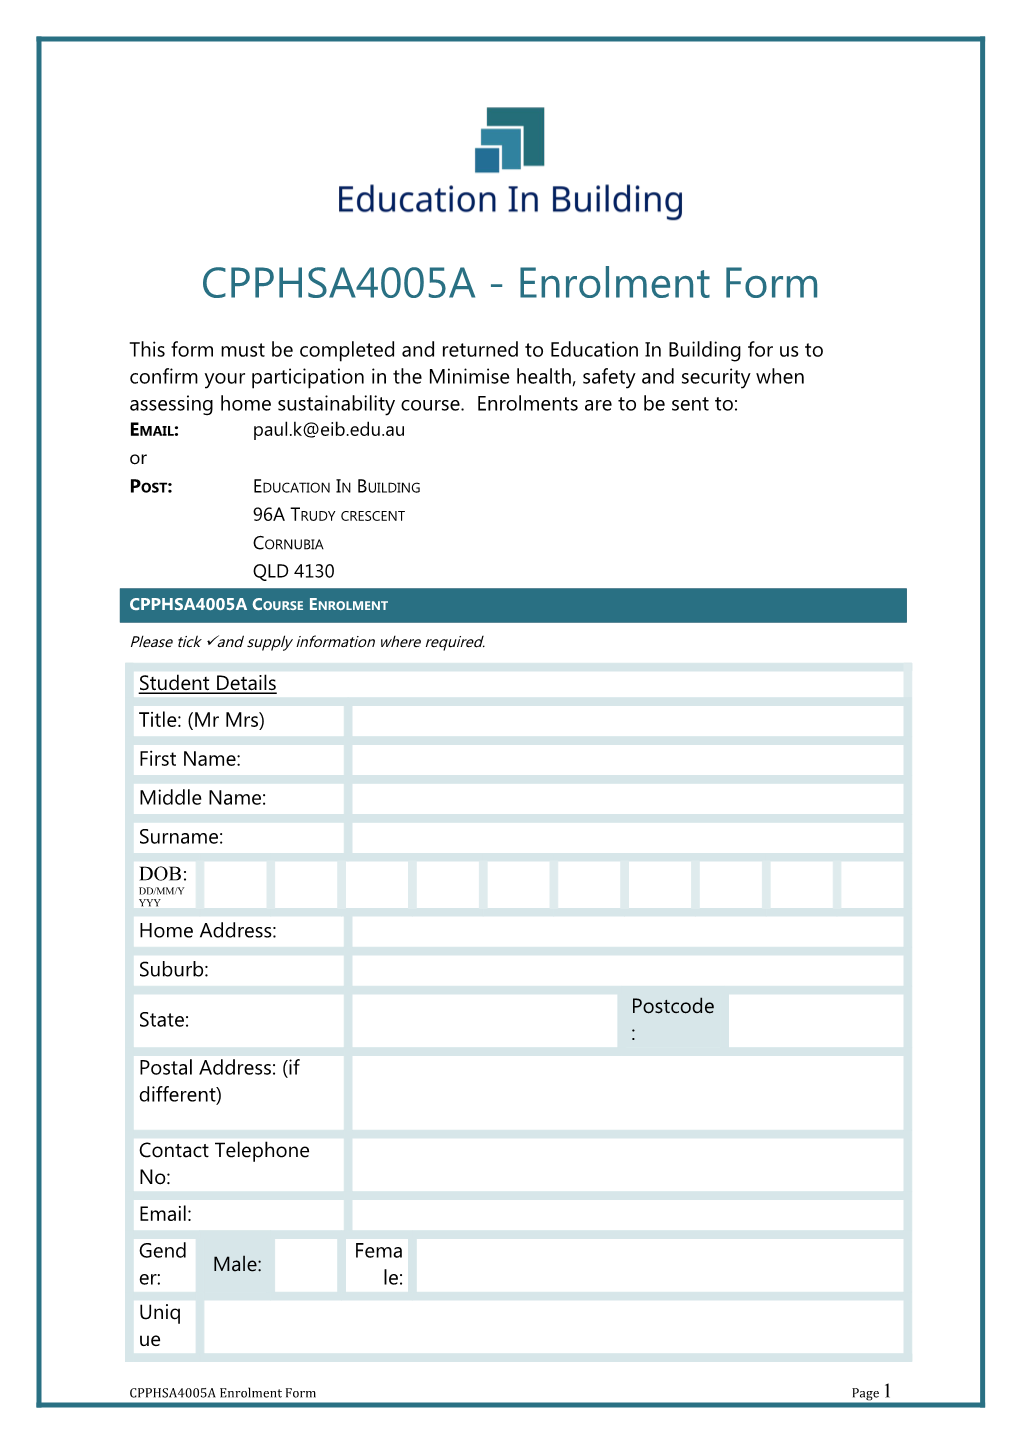 CPPHSA4005A - Enrolment Form